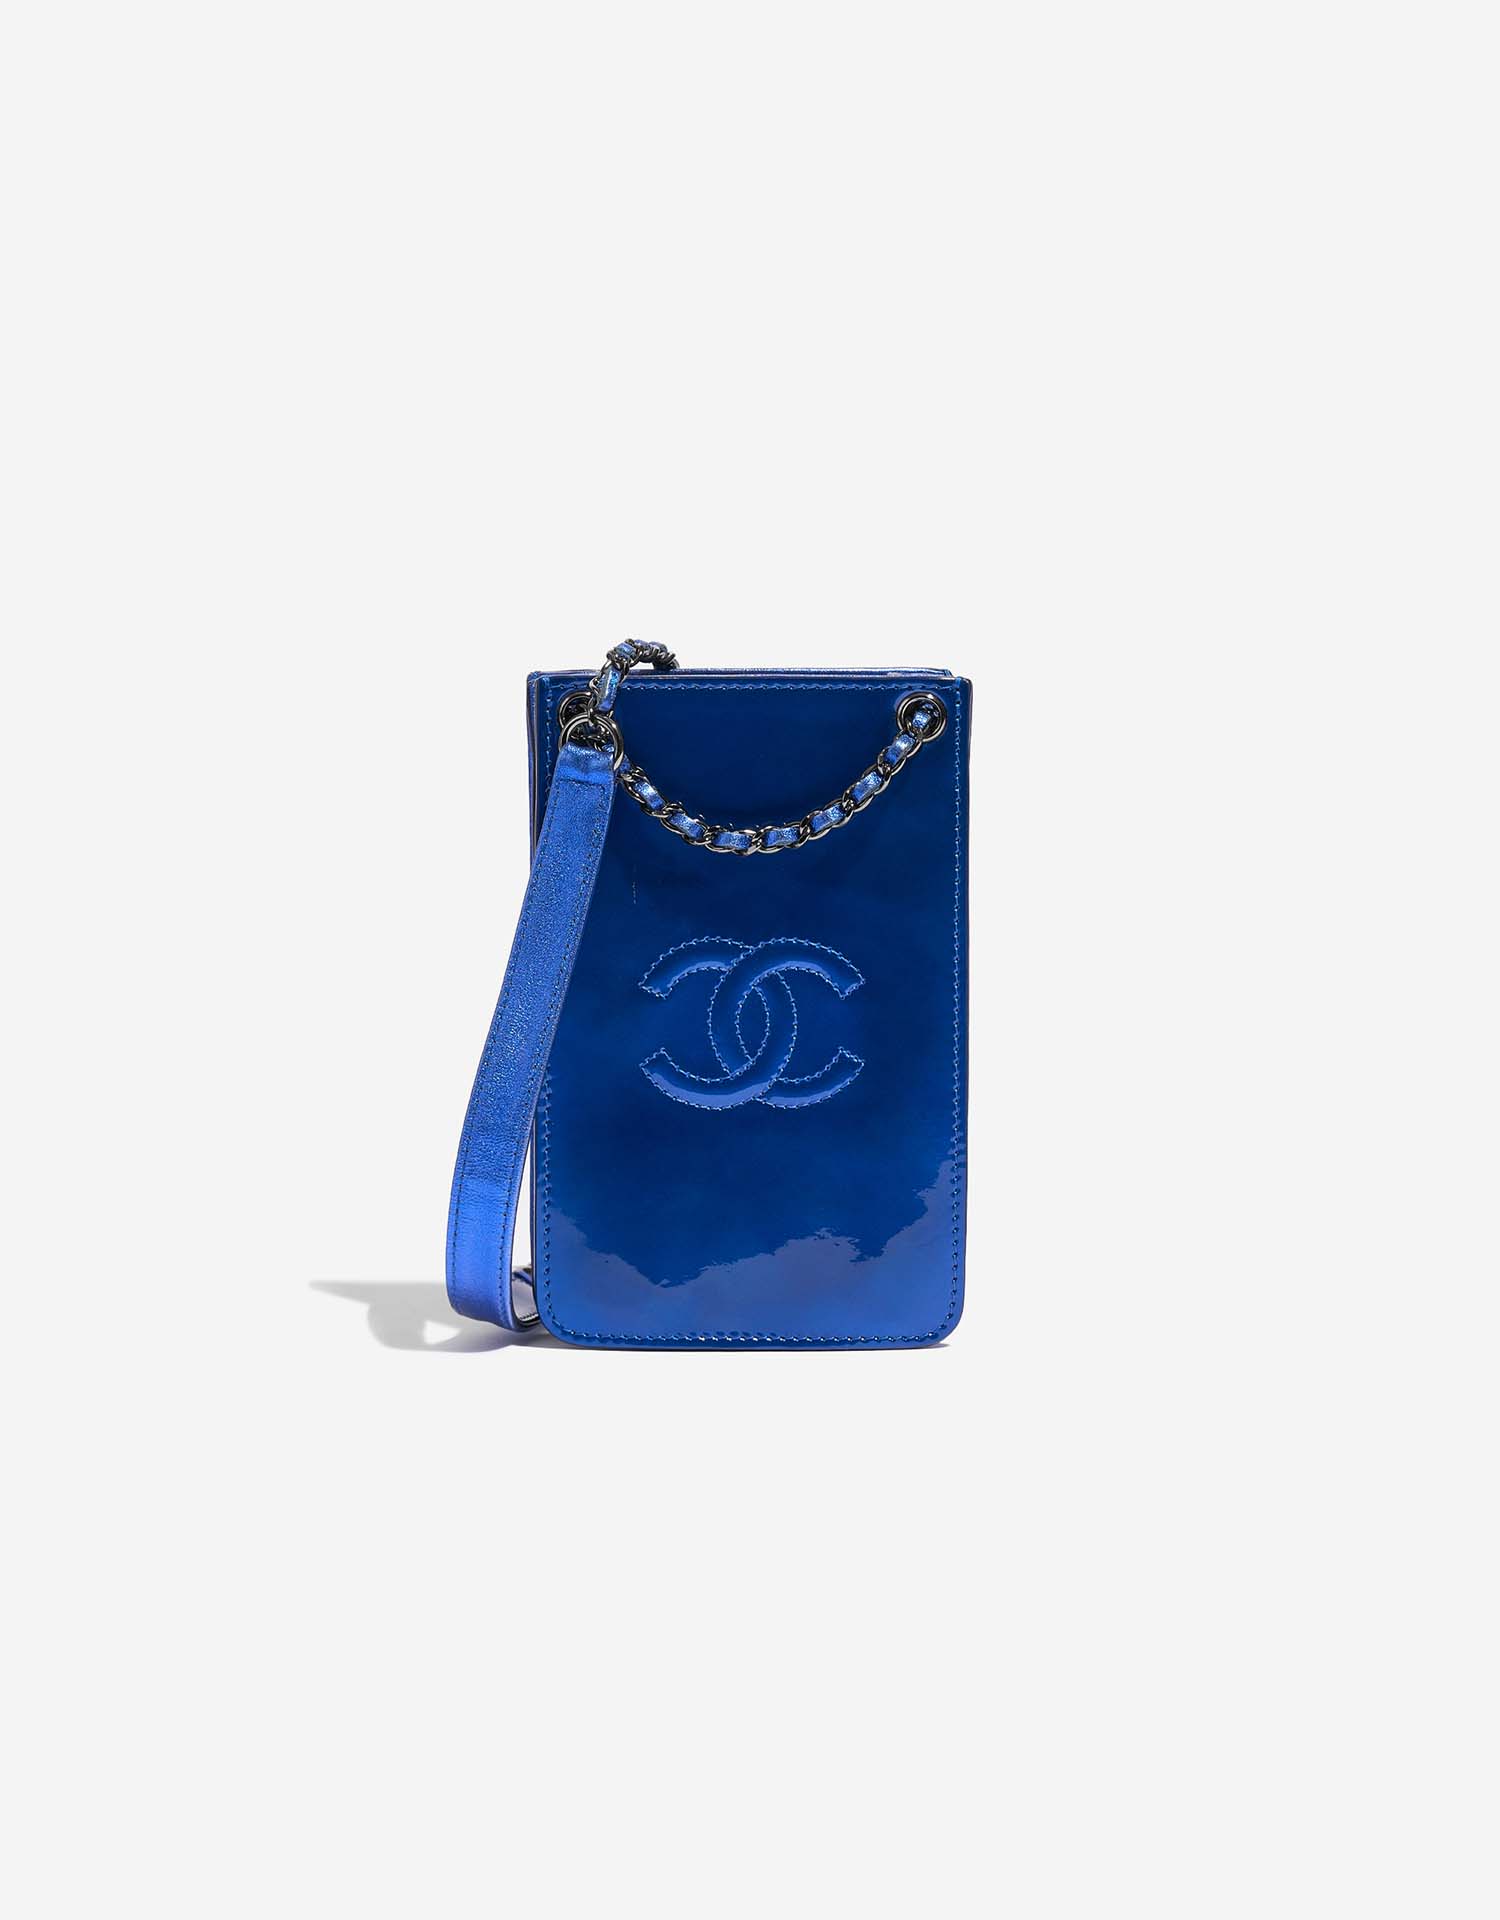 Chanel Patent CC Phone Holder Crossbody - Pink Mini Bags, Handbags -  CHA773075